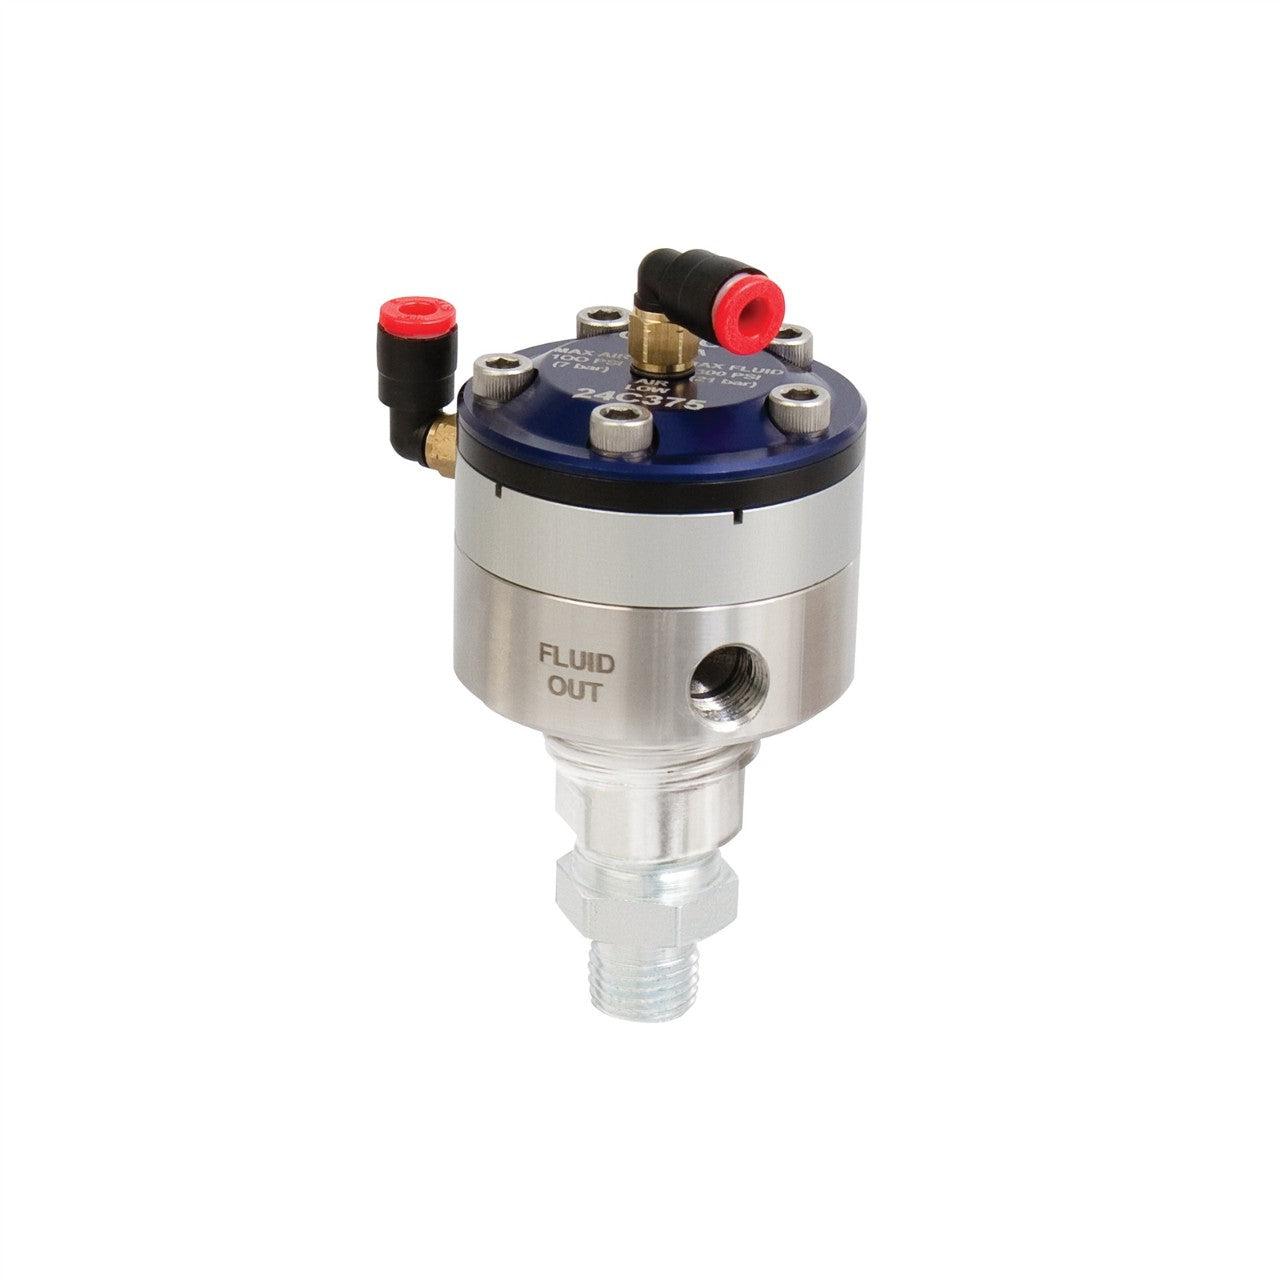 1:3 Precision Flow Fluid Pressure Regulator, 30 psi (2.0 bar) max pressure, black ratio spacer